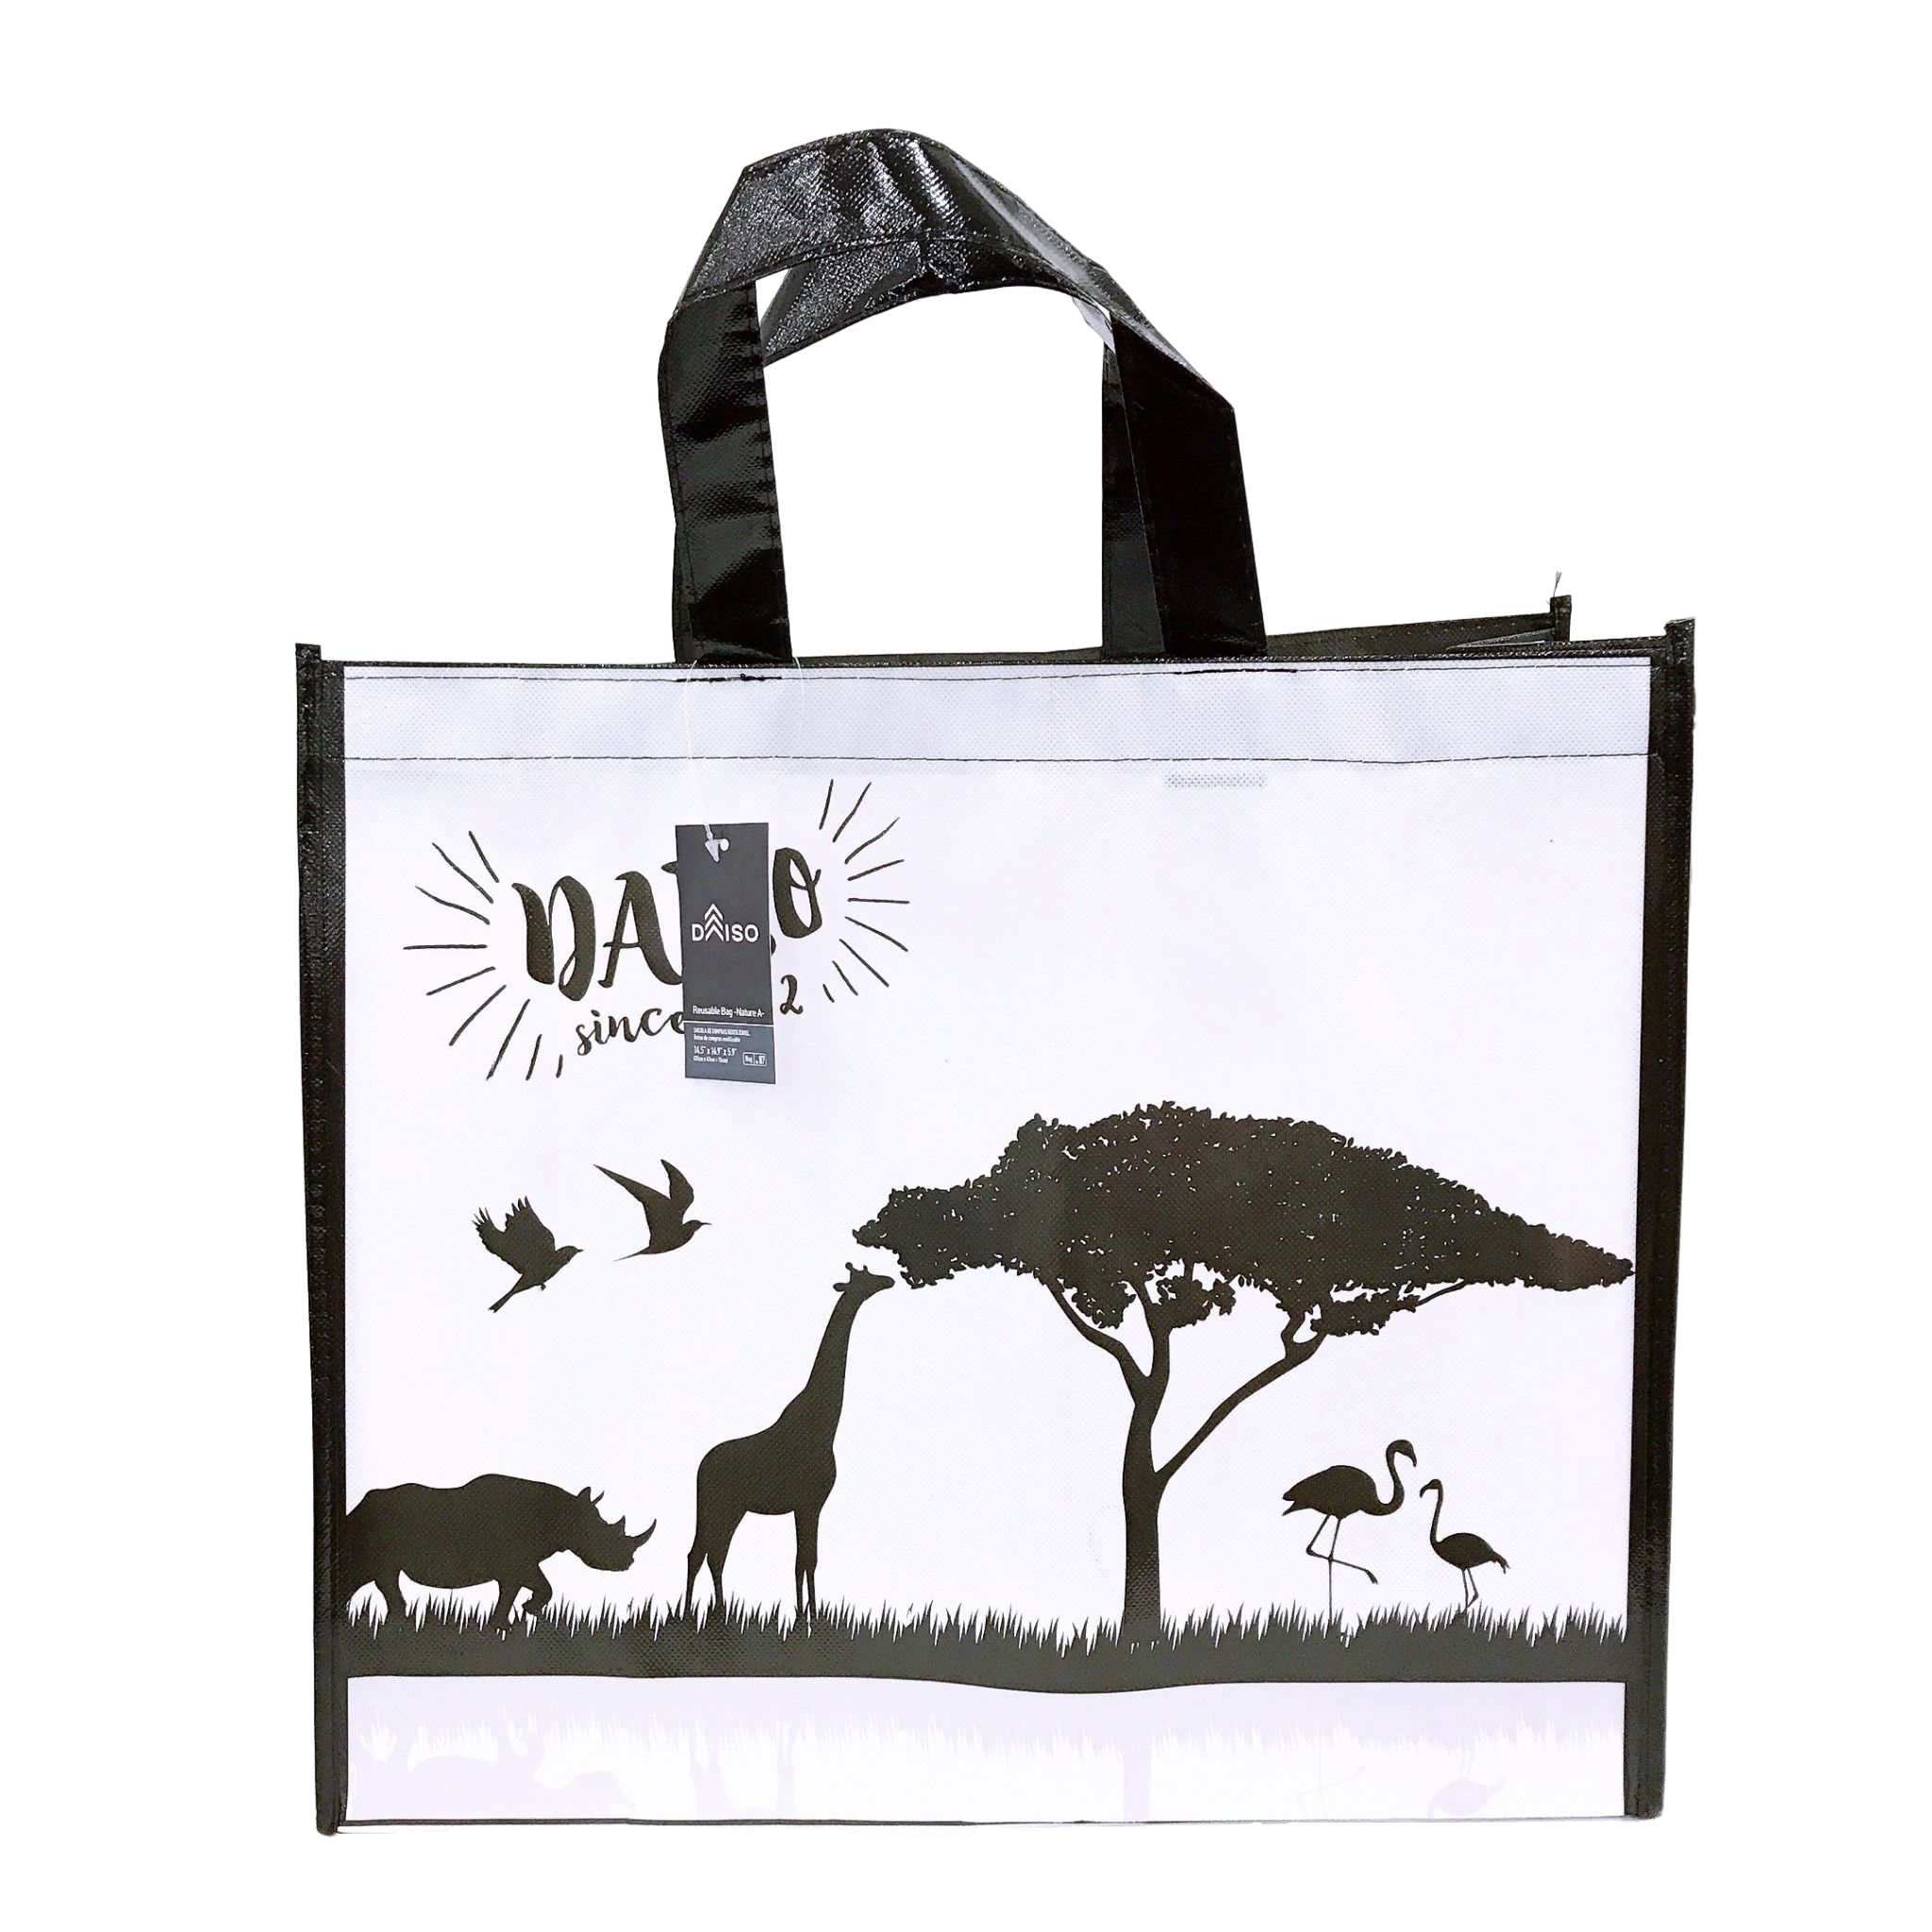 Daiso Hawaii - Koi design Daiso bags ... perfect for upcoming #koinobori!  New bag designs available at Pearl City Daiso 🎏 #koi #childrensday  #boysday #japan #daiso #daisohinew #daisohawaii | Facebook